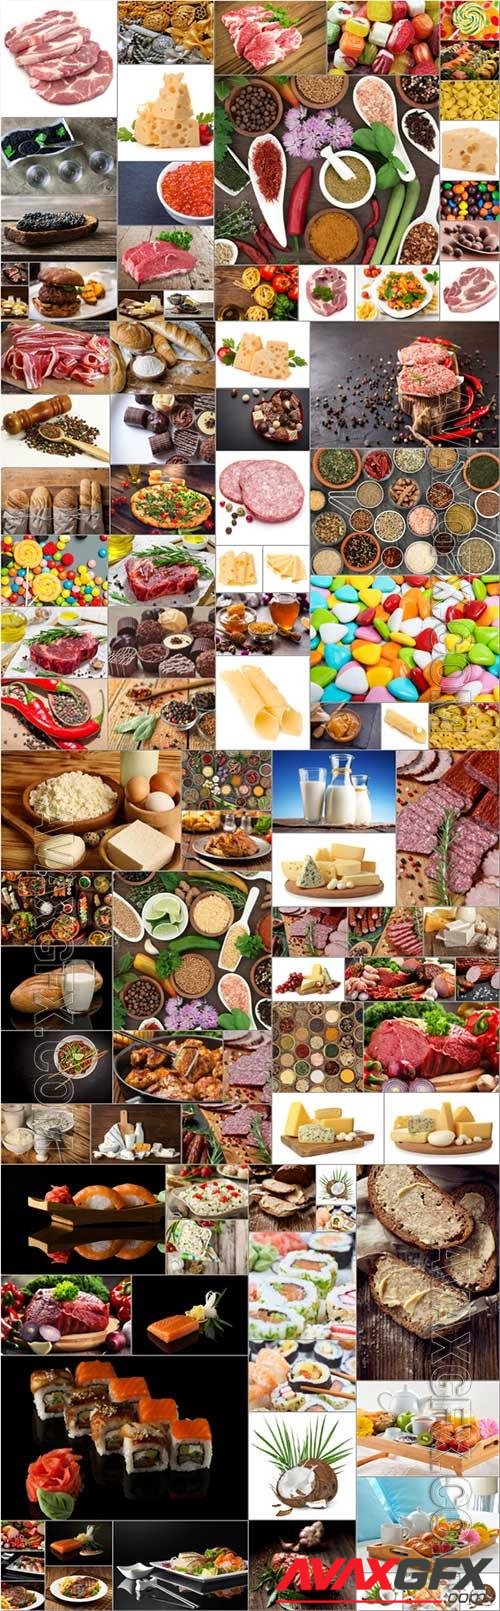 Food, meat, vegetables, fruits, fish, stock photo bundle vol 7